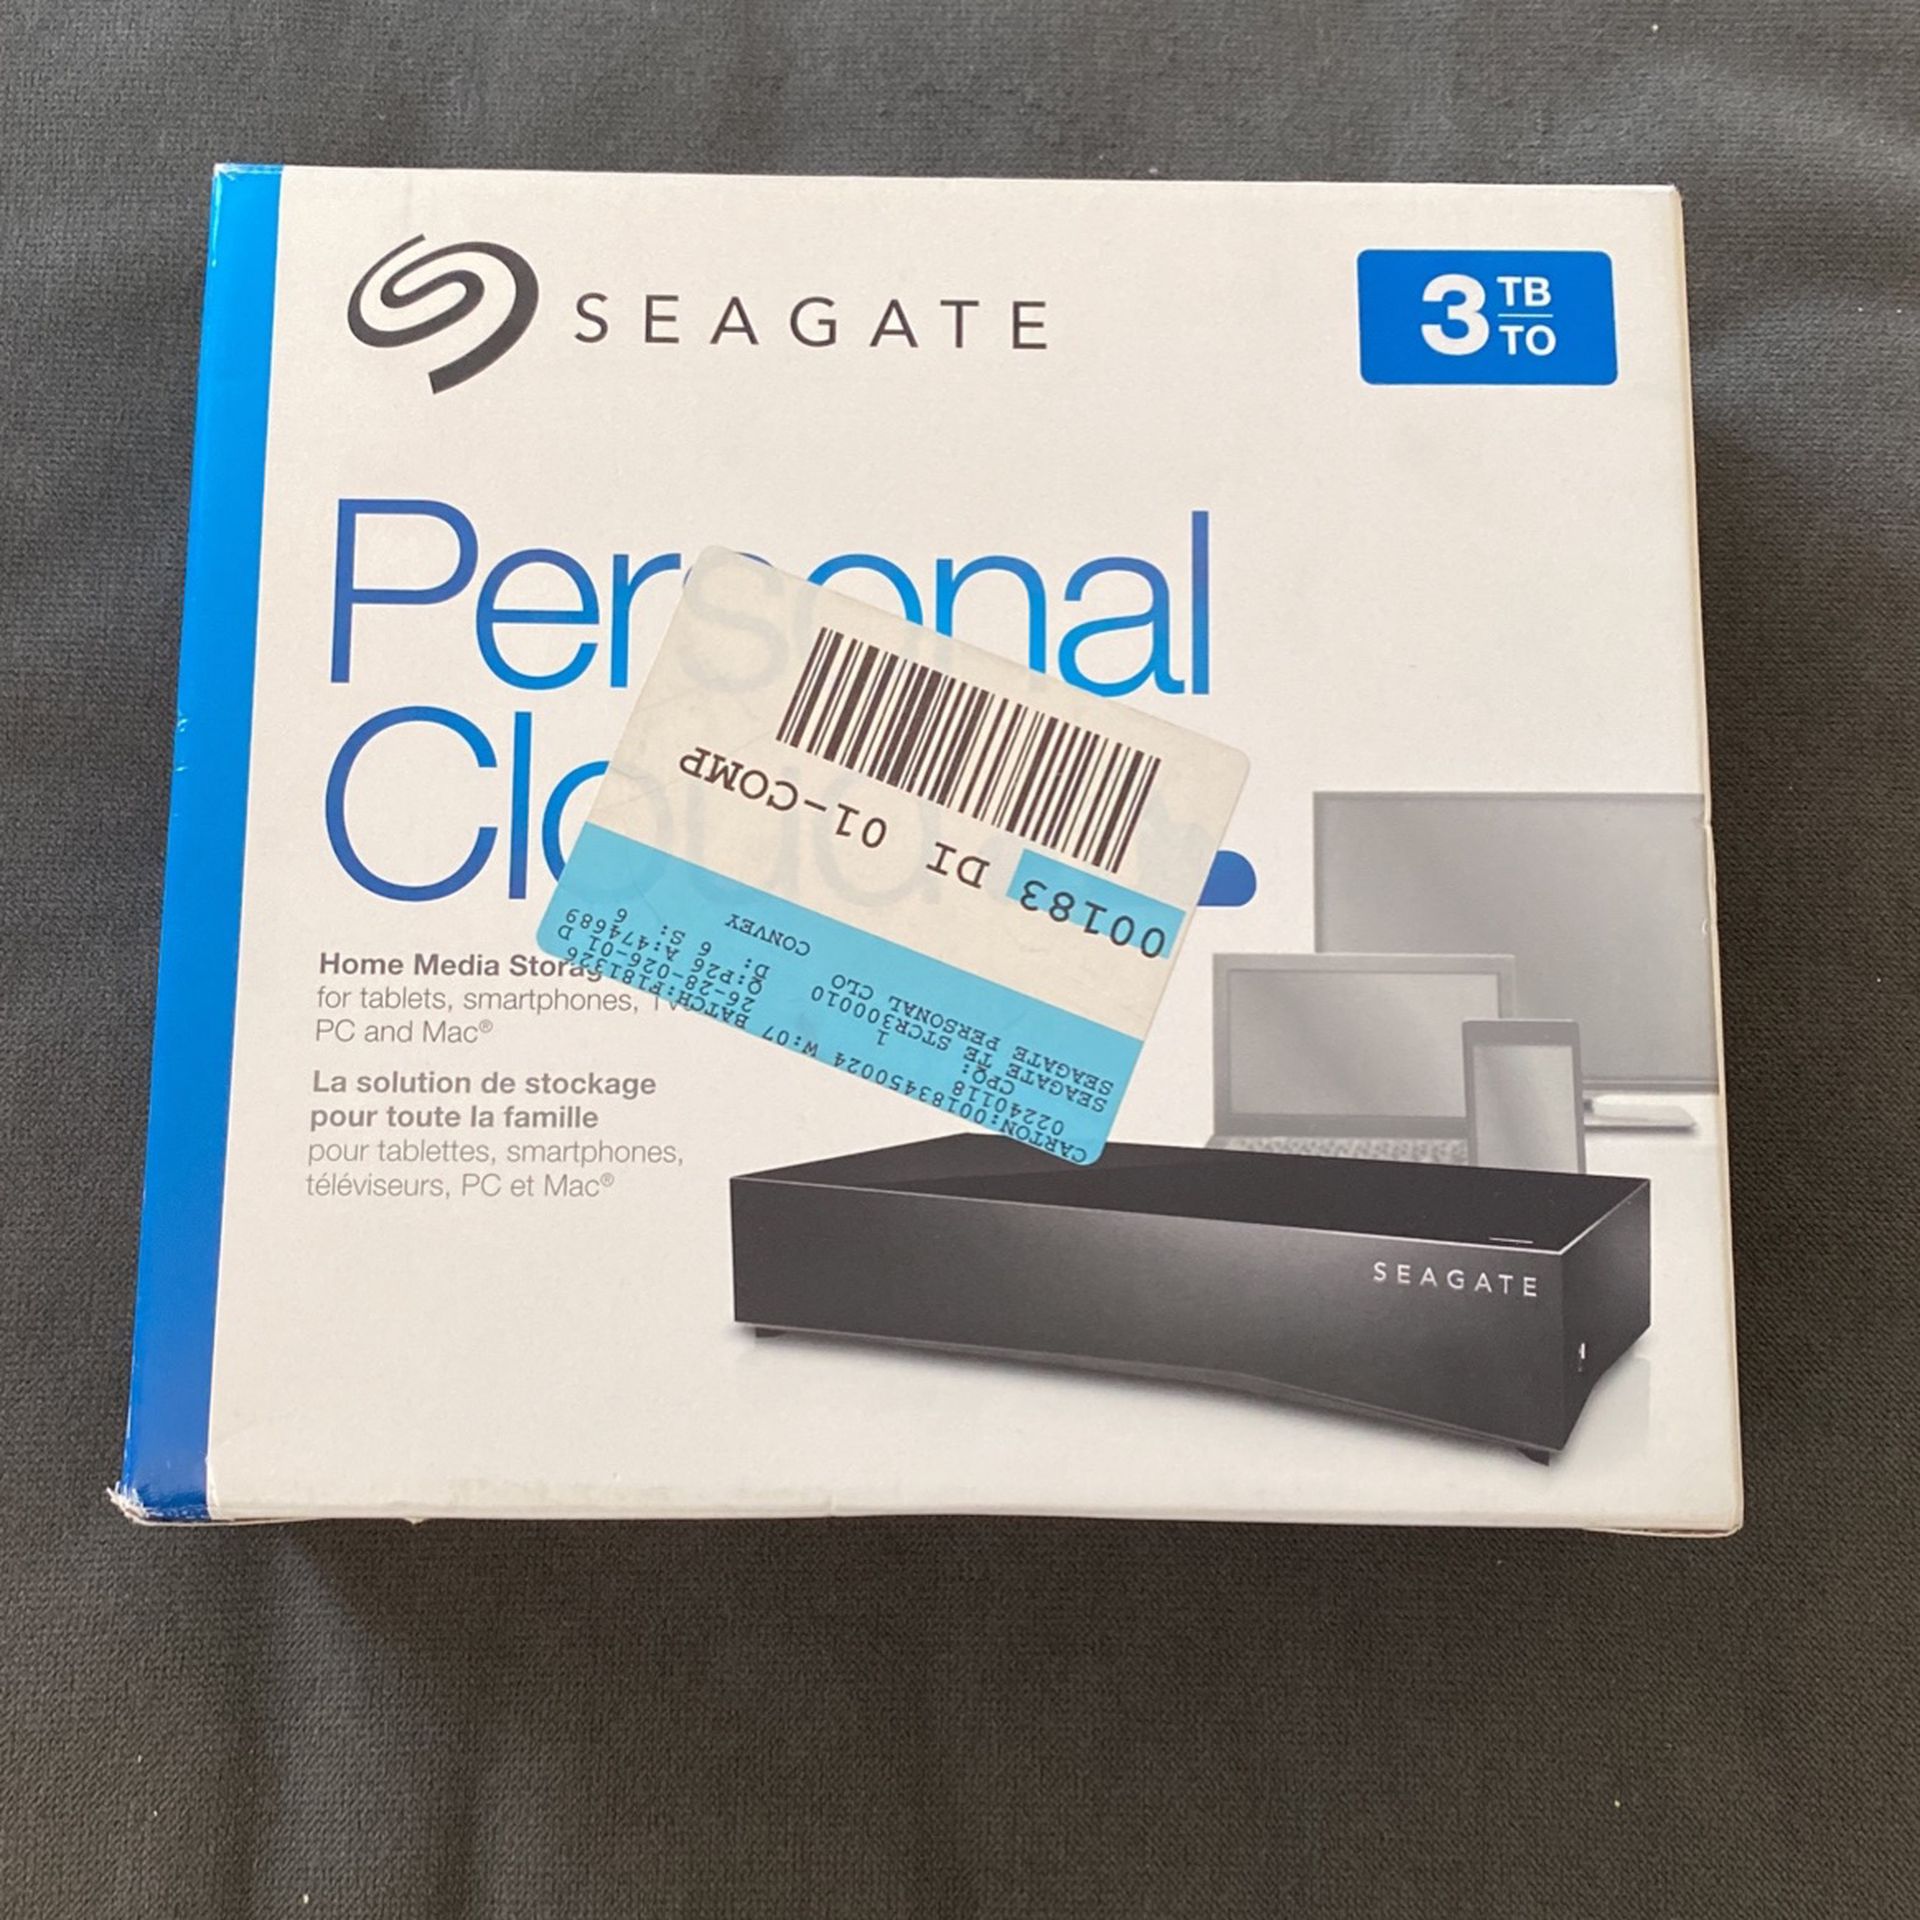 Seagate Personal Cloud - Home Media Storage 3TB